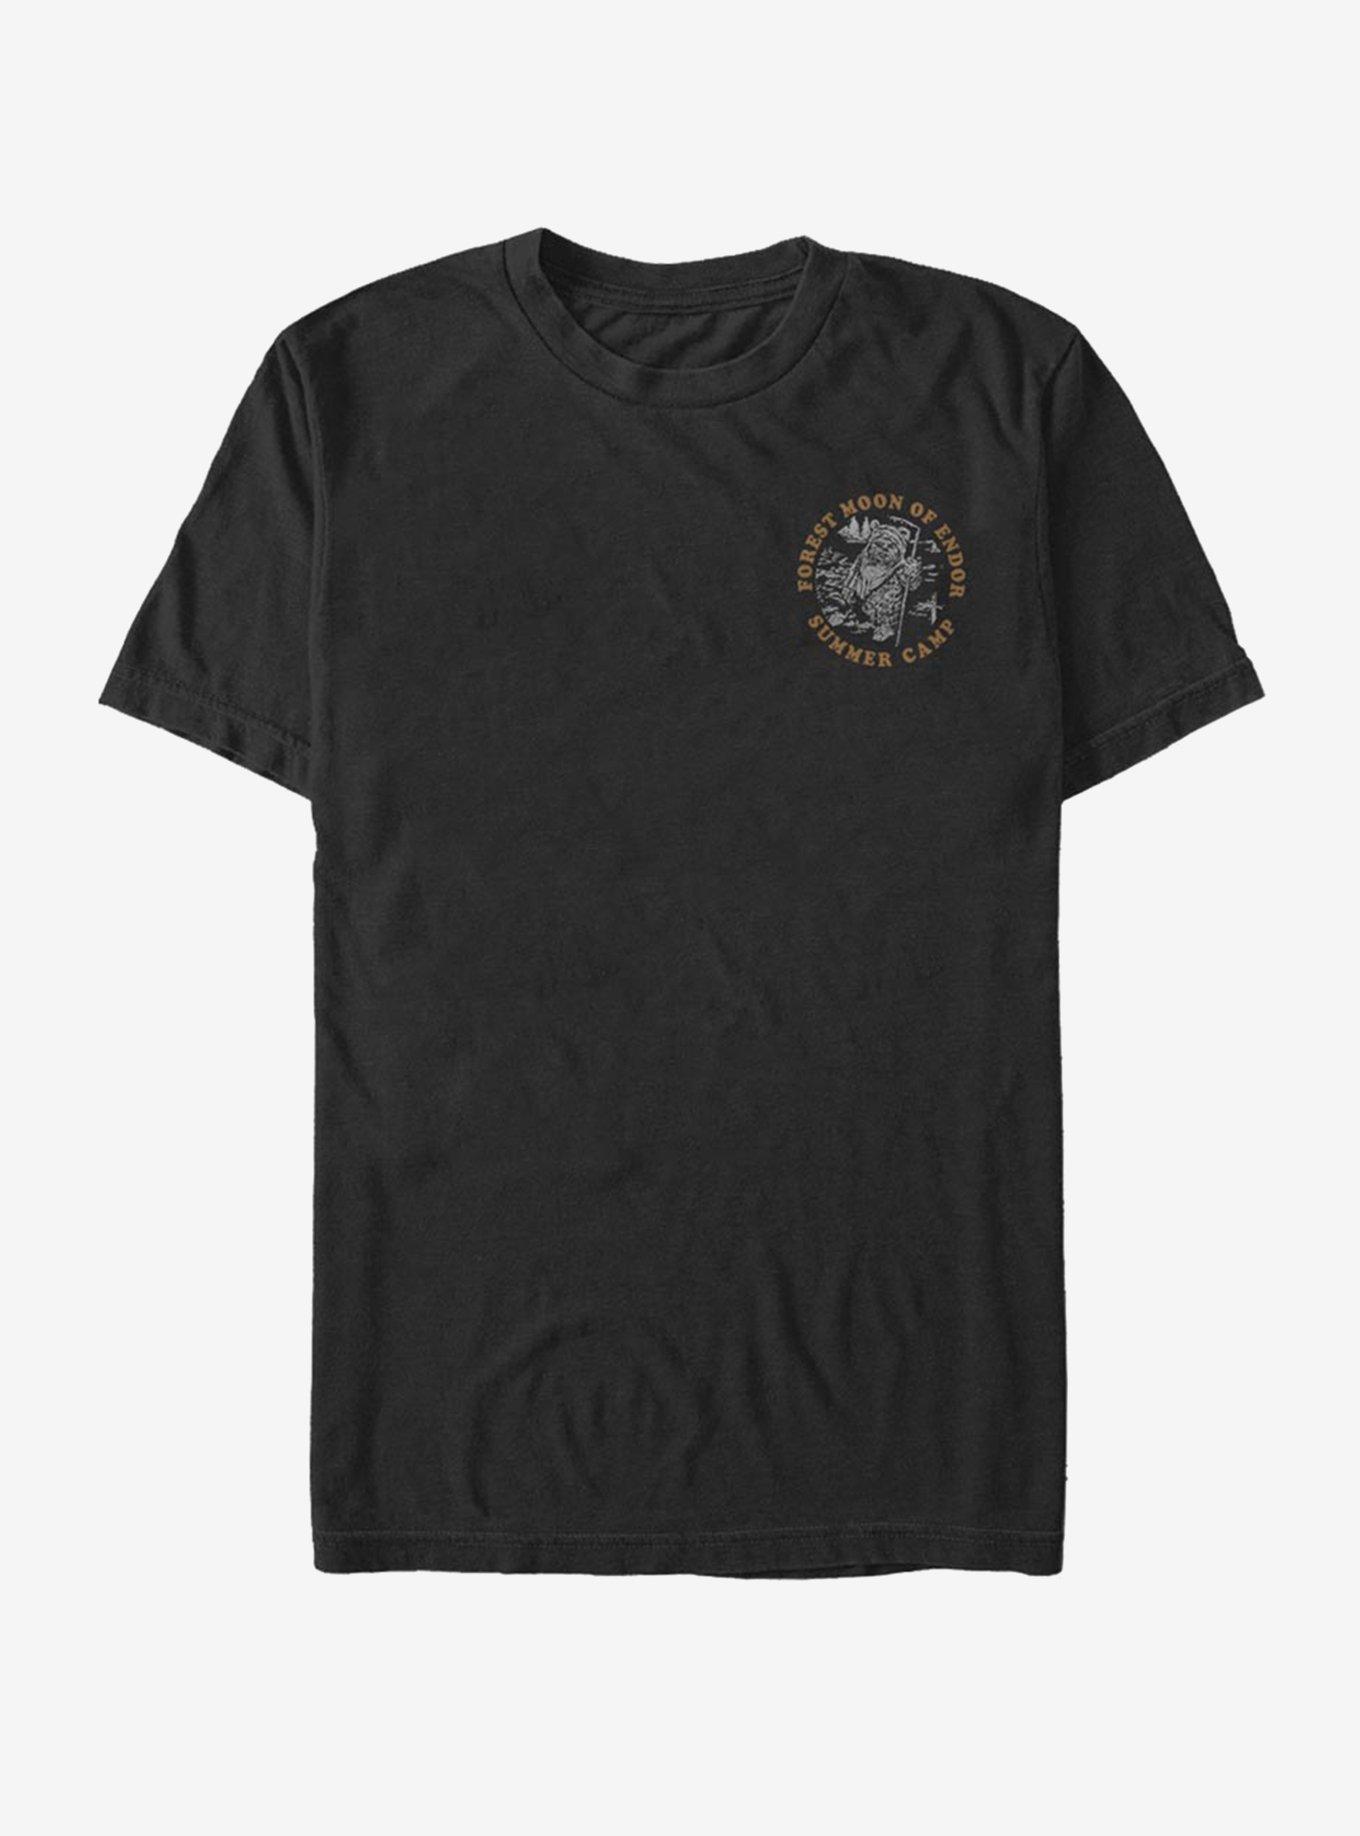 Star Wars Endor Ewoks T-Shirt, BLACK, hi-res